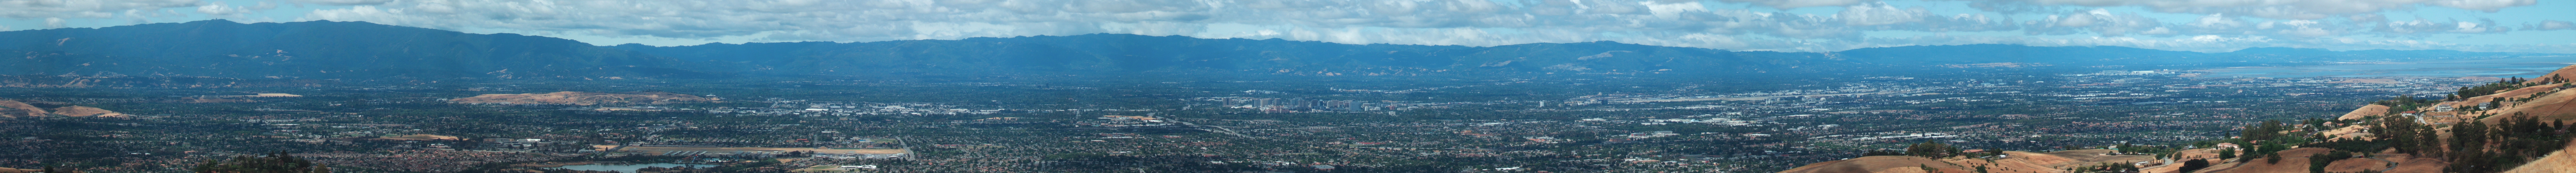 San Jose Panorama from Mt. Hamilton Road near Masters Hill